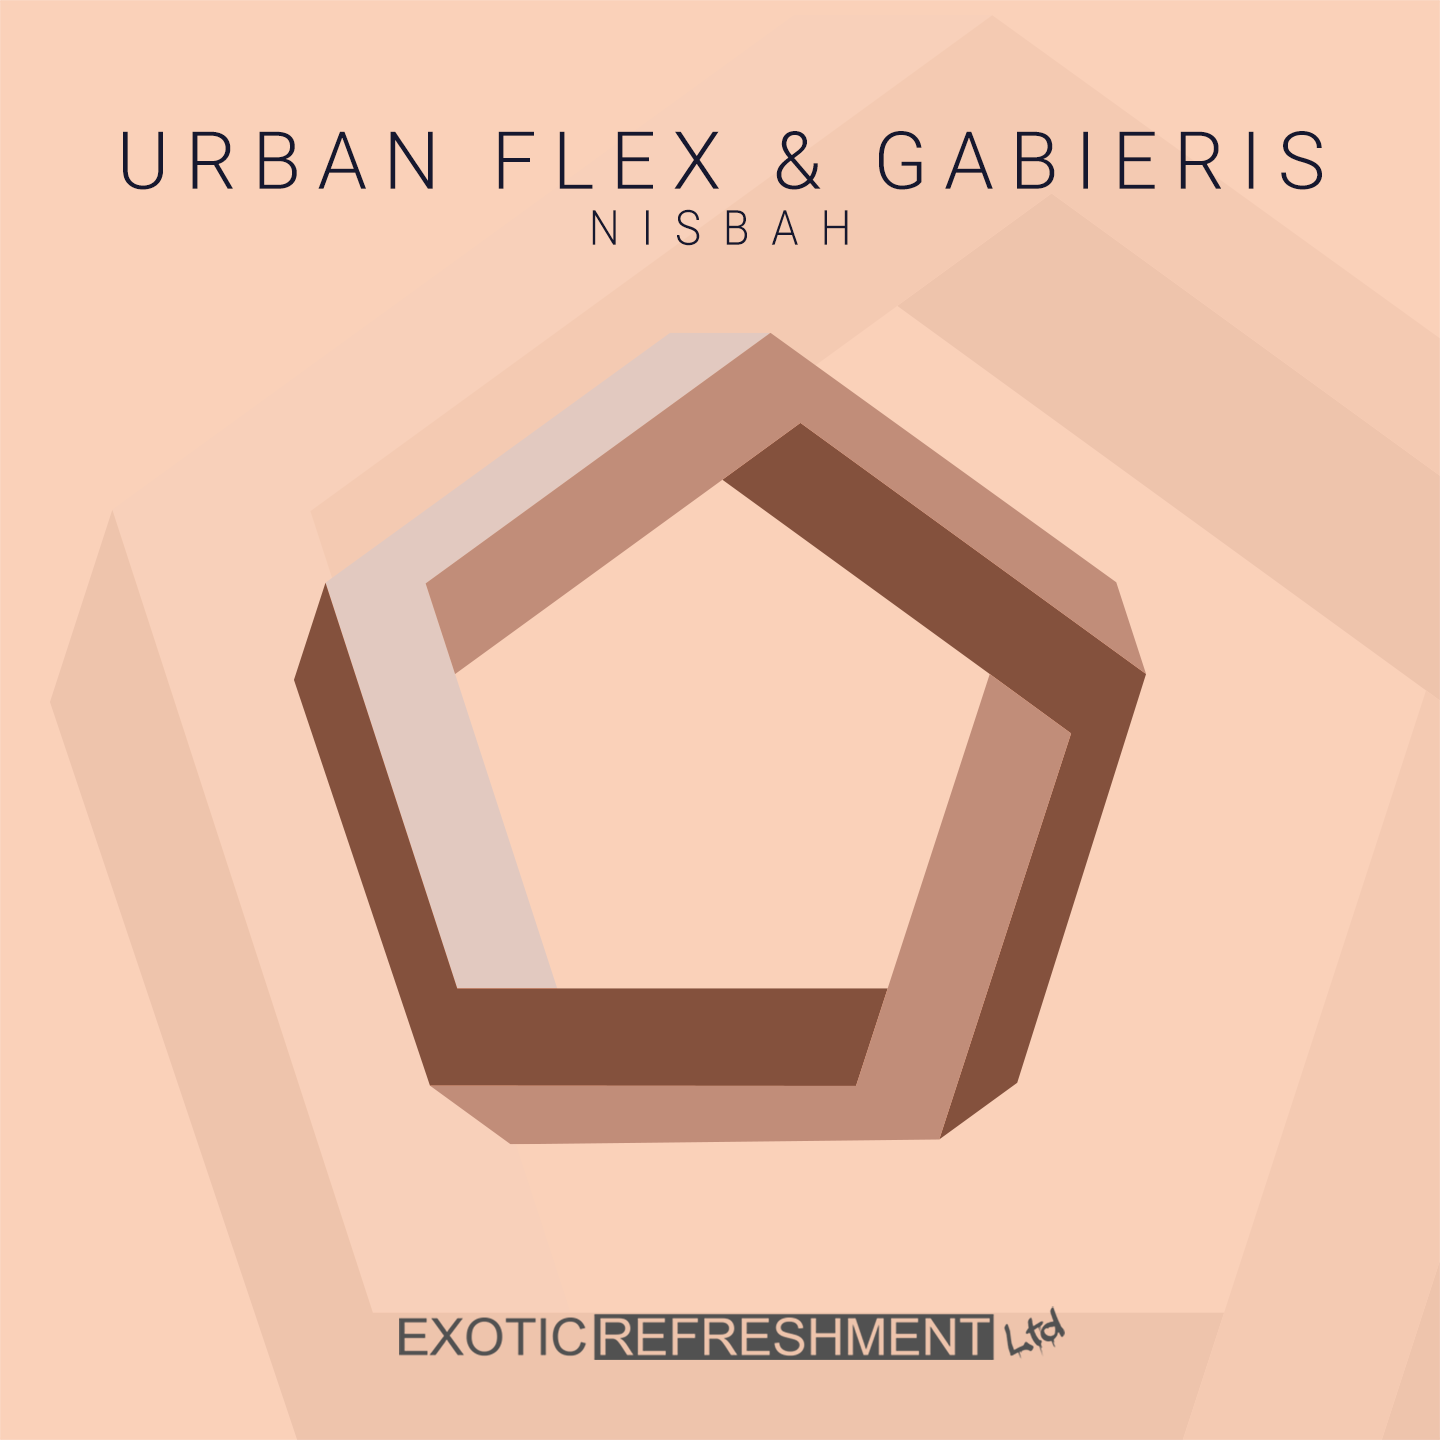 Urban Flex & Gabieris - Nisbah